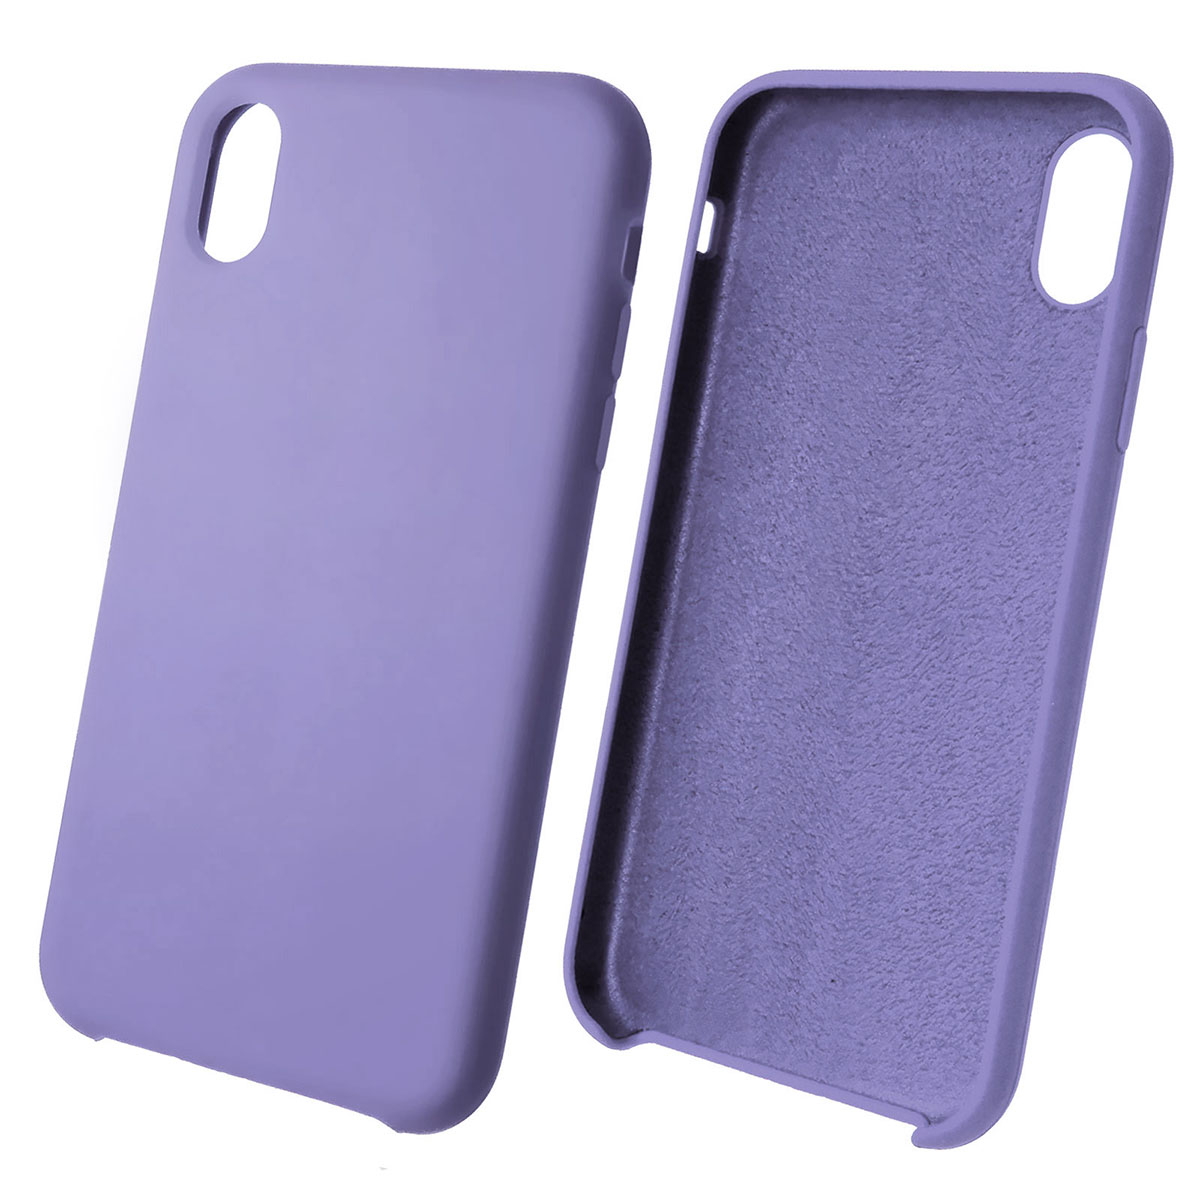 Чехол накладка Silicon Case для APPLE iPhone XR, силикон, бархат, цвет сиреневый.